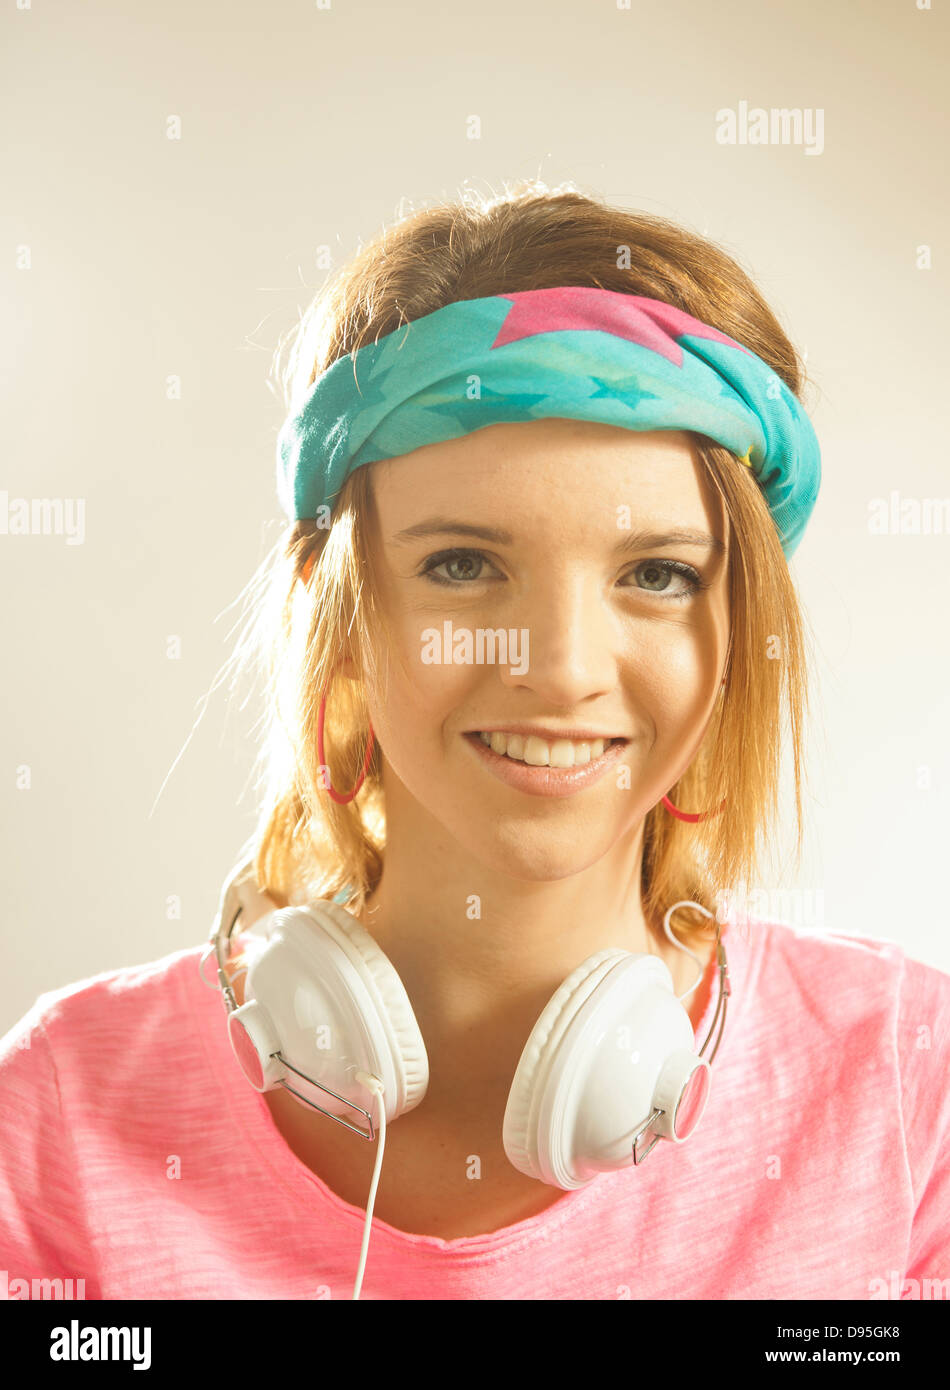 Head and shoulders portrait of teenage girl wearing a headband and headphones in studio. Stock Photo